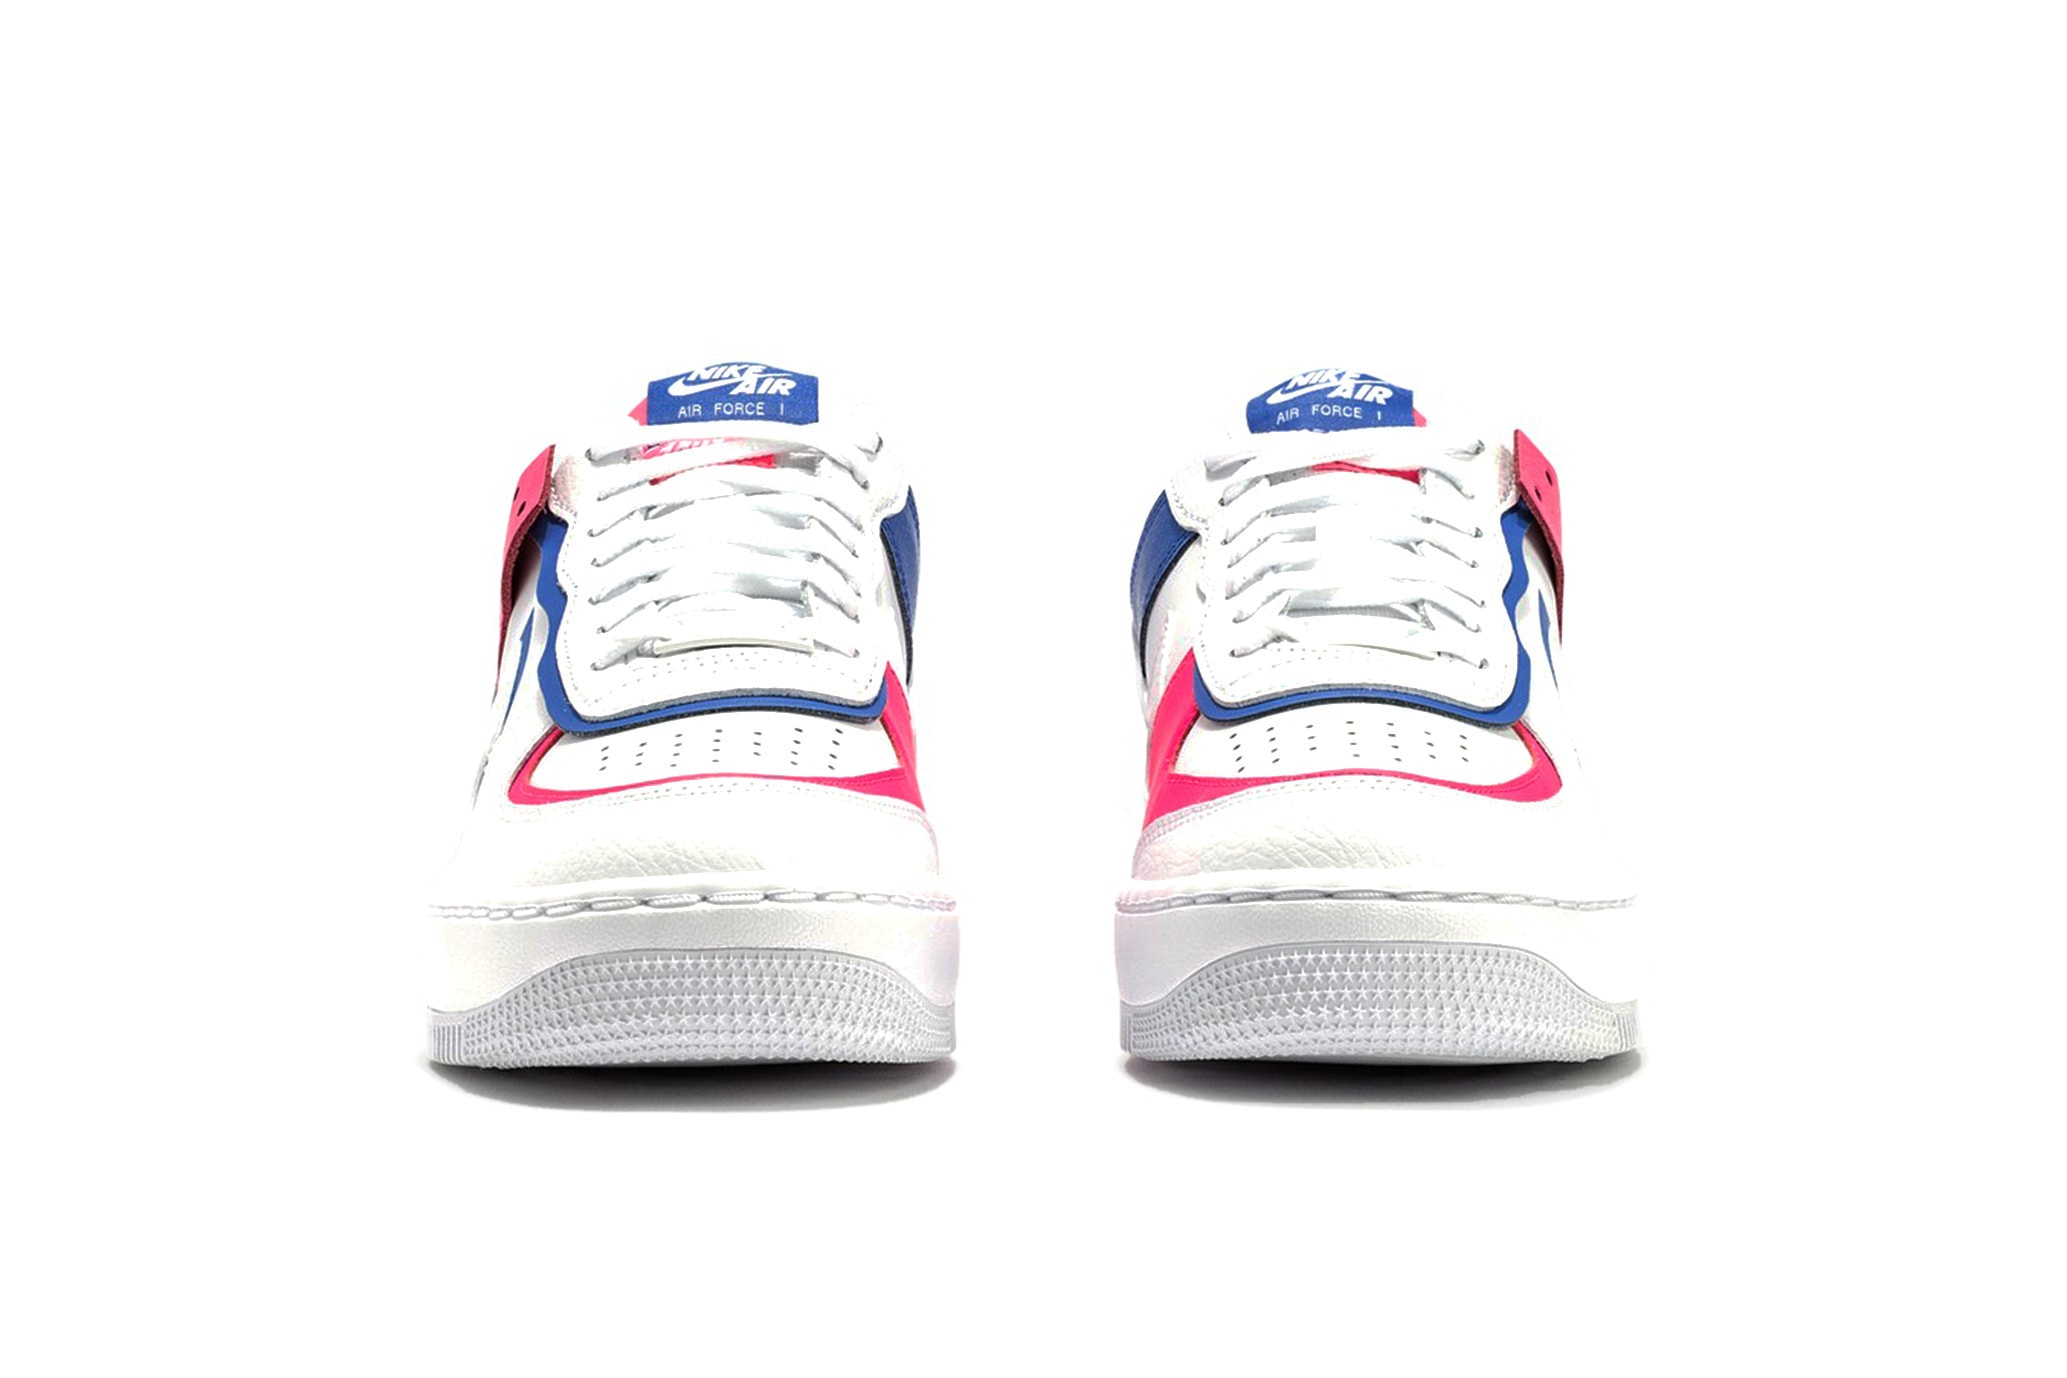 nike air force 1 shadow af-1 white blue pink sneaker footwear swoosh hbx online purchase cop